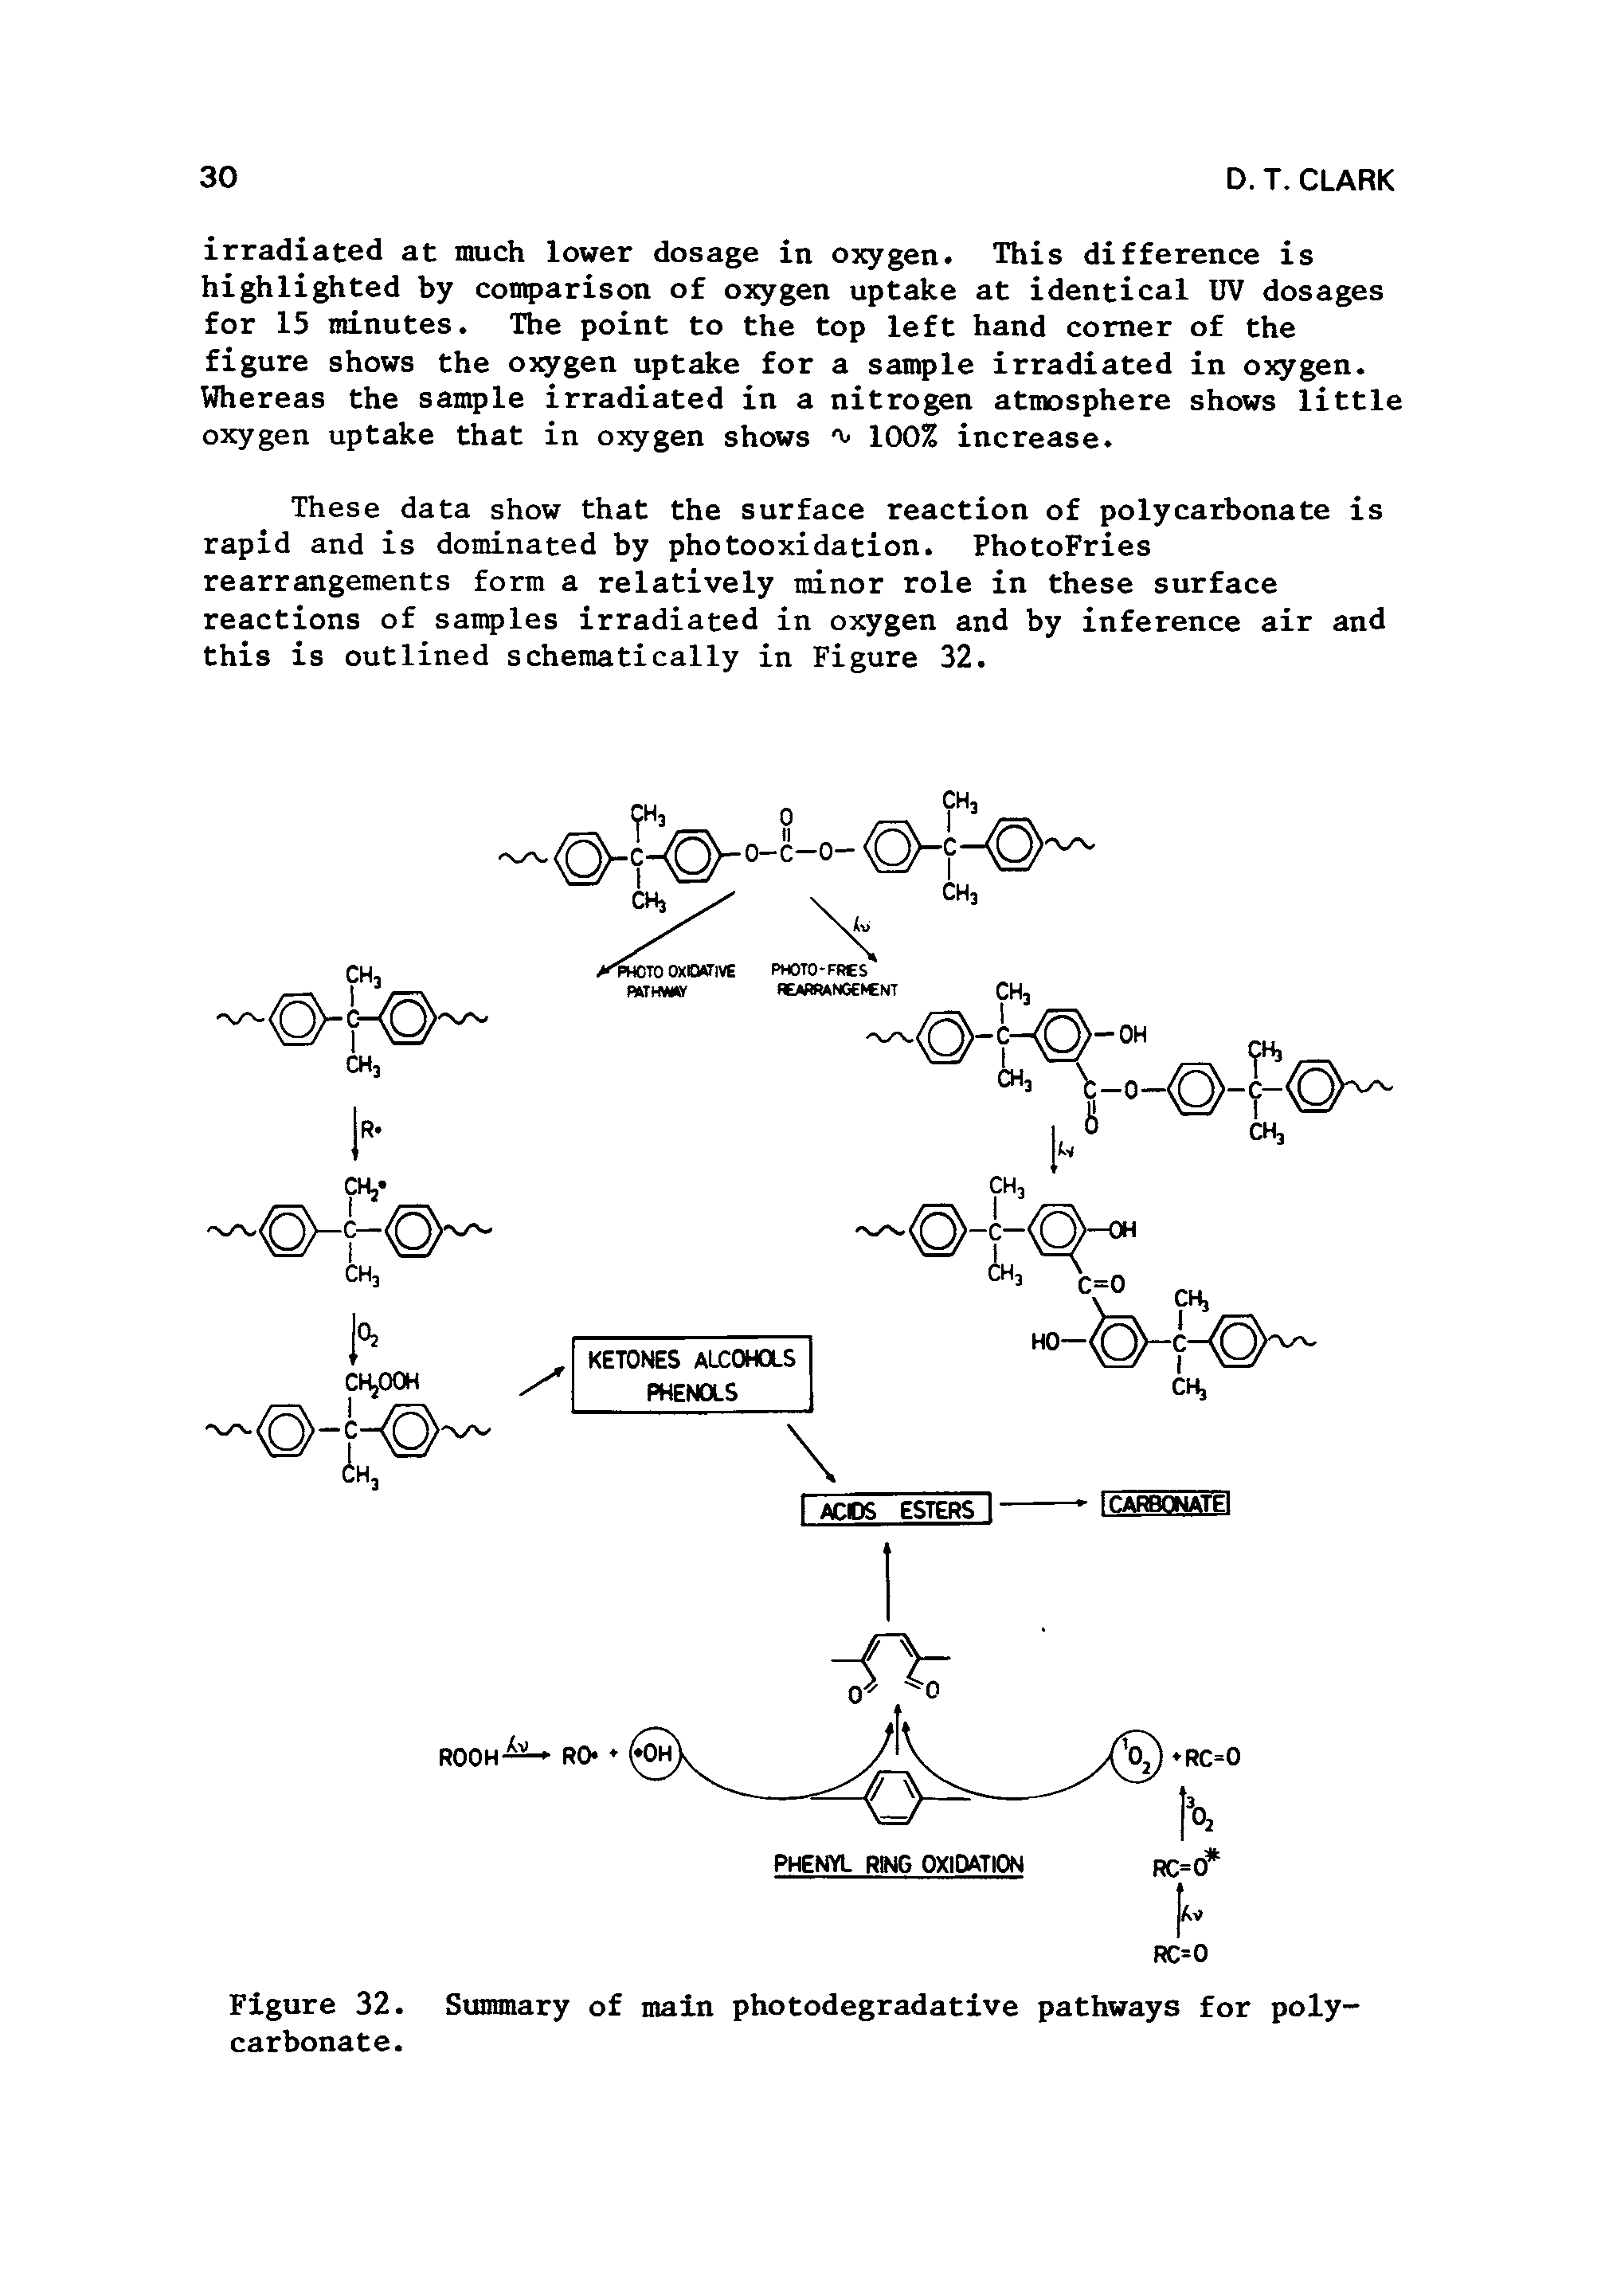 Figure 32. Summary of main photodegradative pathways for polycarbonate.